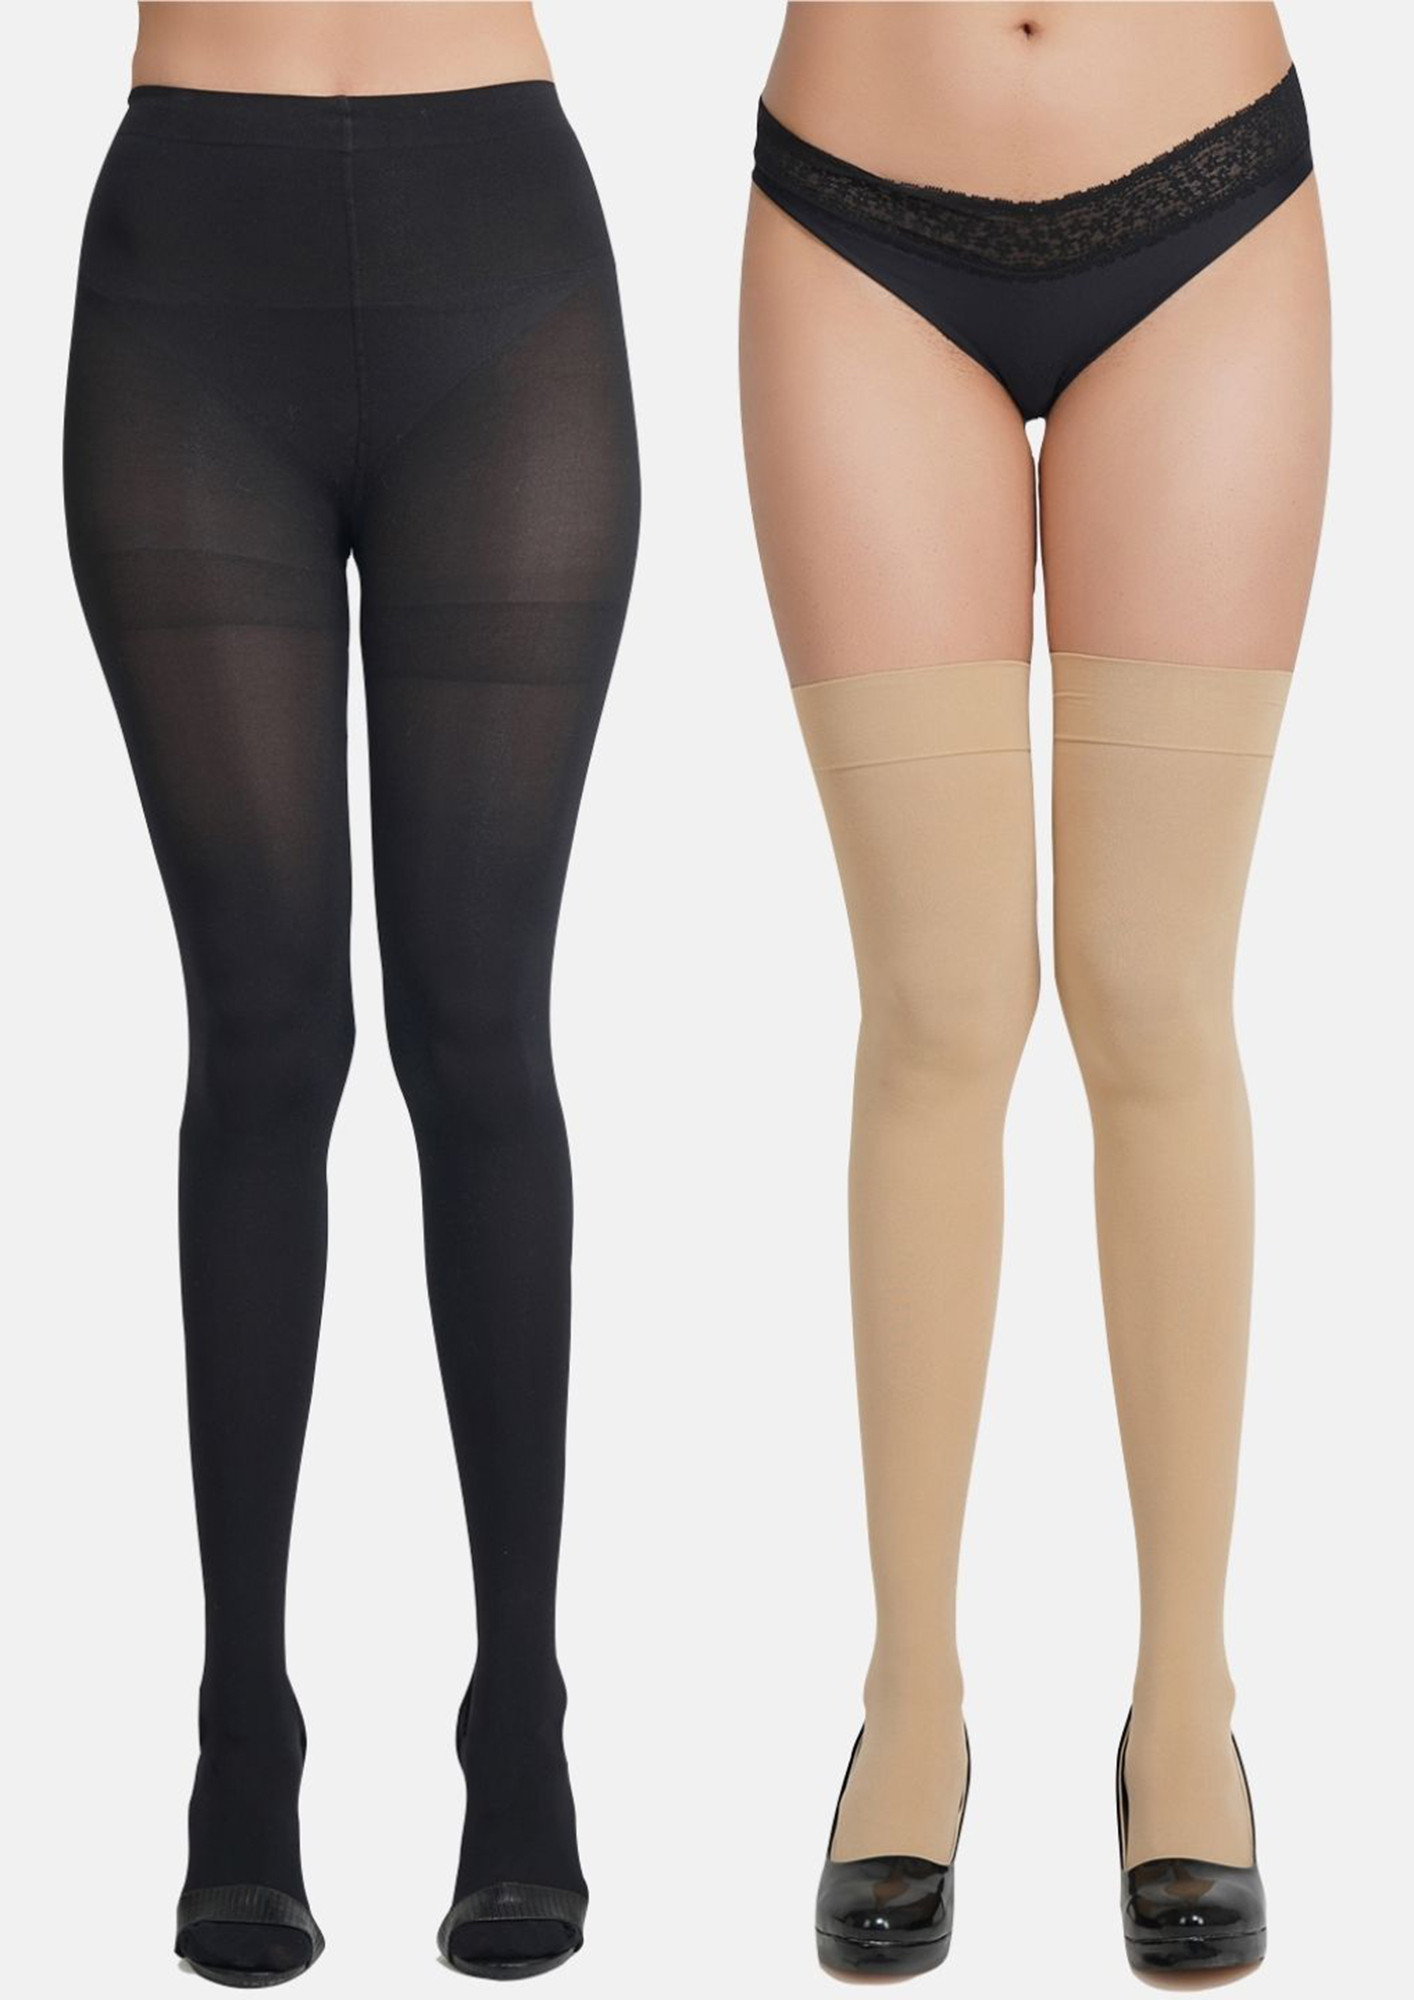 Buy NEXT2SKIN Women Nylon Opaque Pantyhose Stockings Combo (Black&Skin) for  Women Online in India